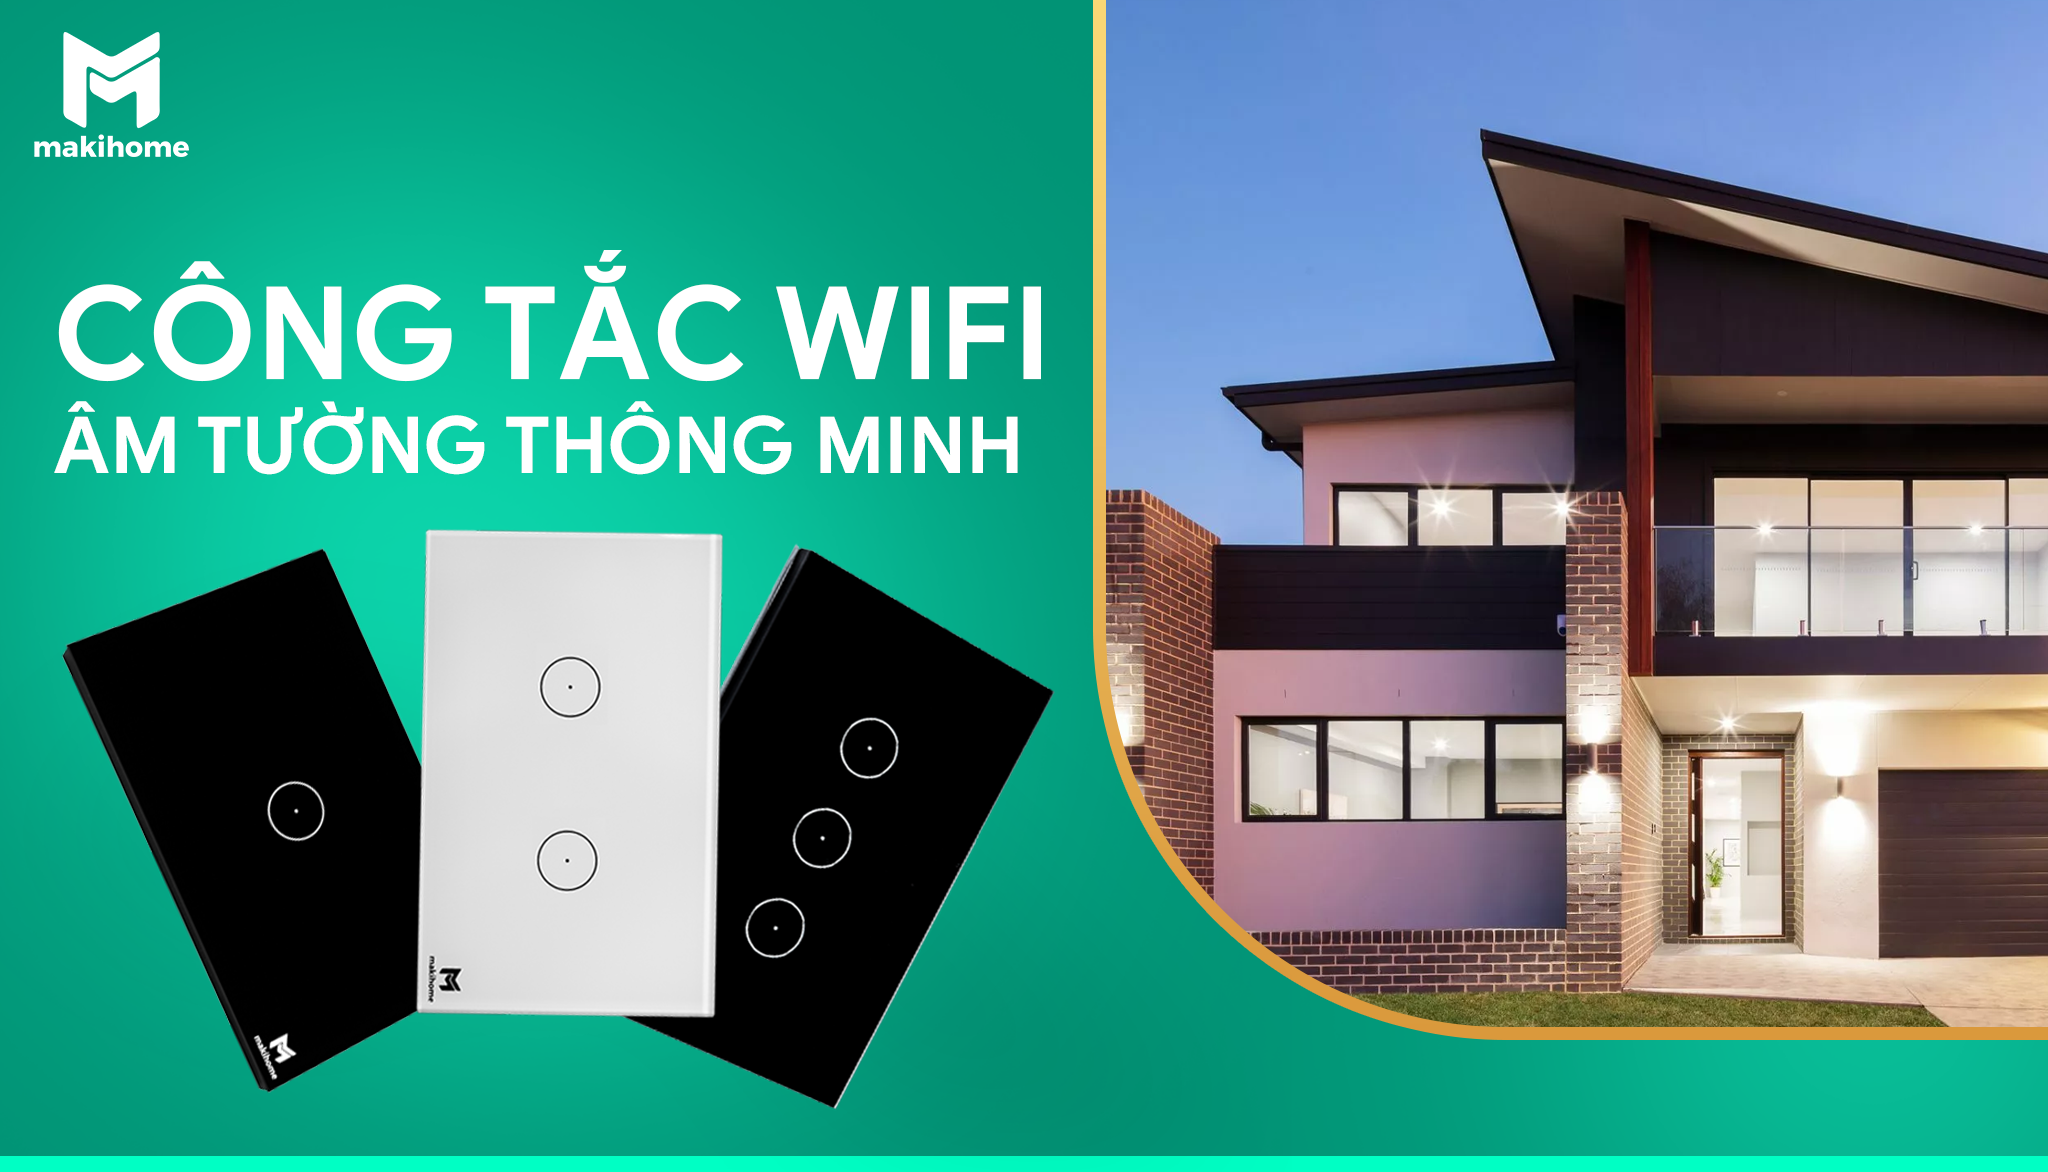 cong-tac-wifi-am-tuong-thong-minh-makihome